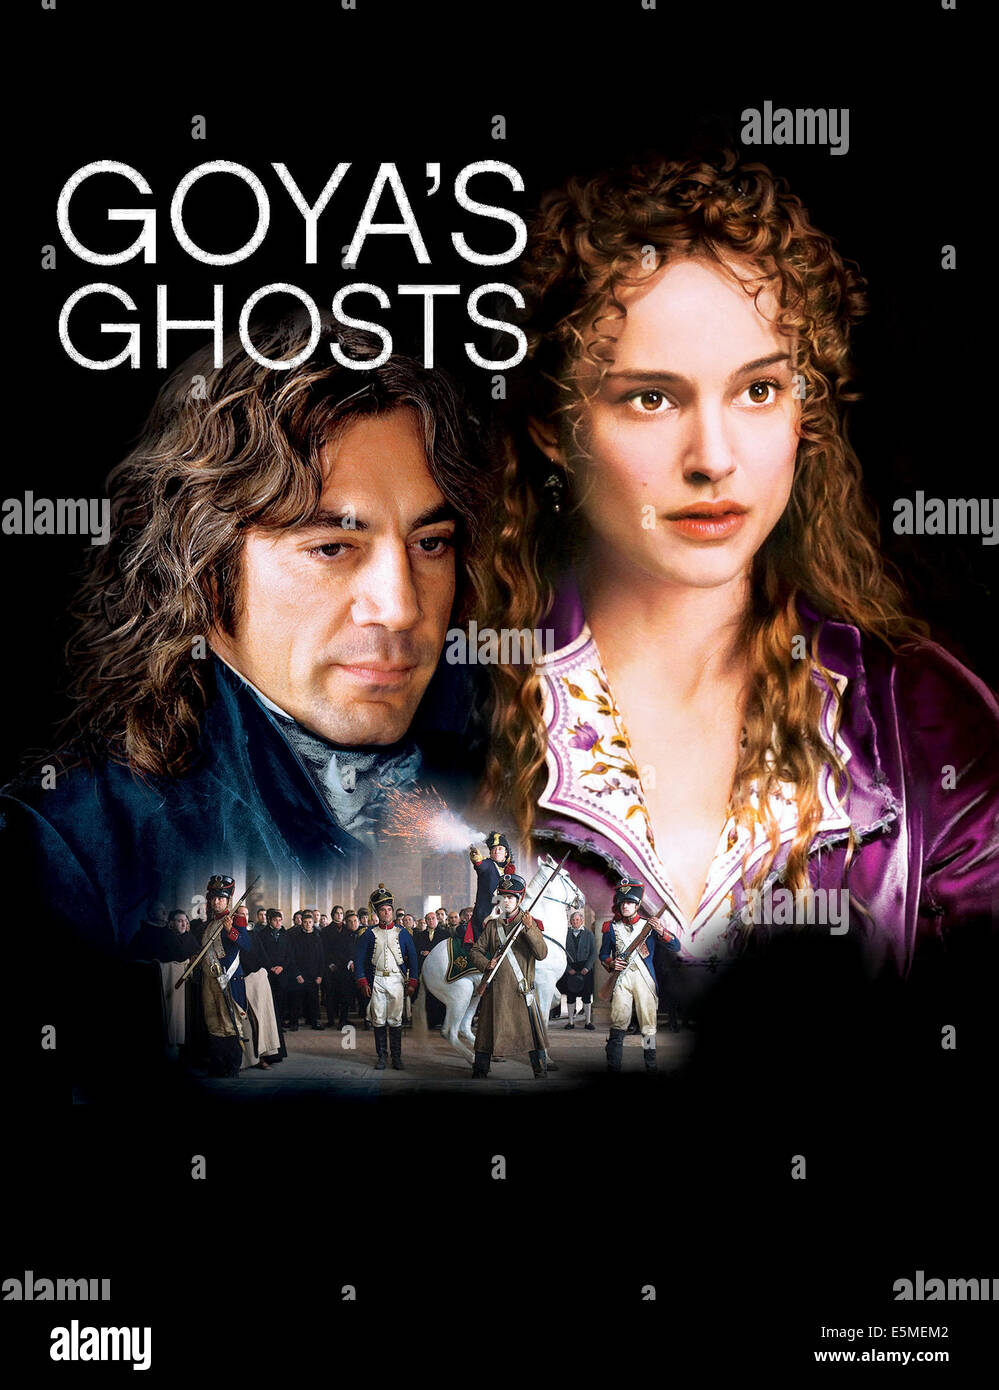 GOYAS Geister, top: Javier Bardem, Natalie Portman, 2006. © Warner Bros. / Courtesy Everett Collection Stockfoto